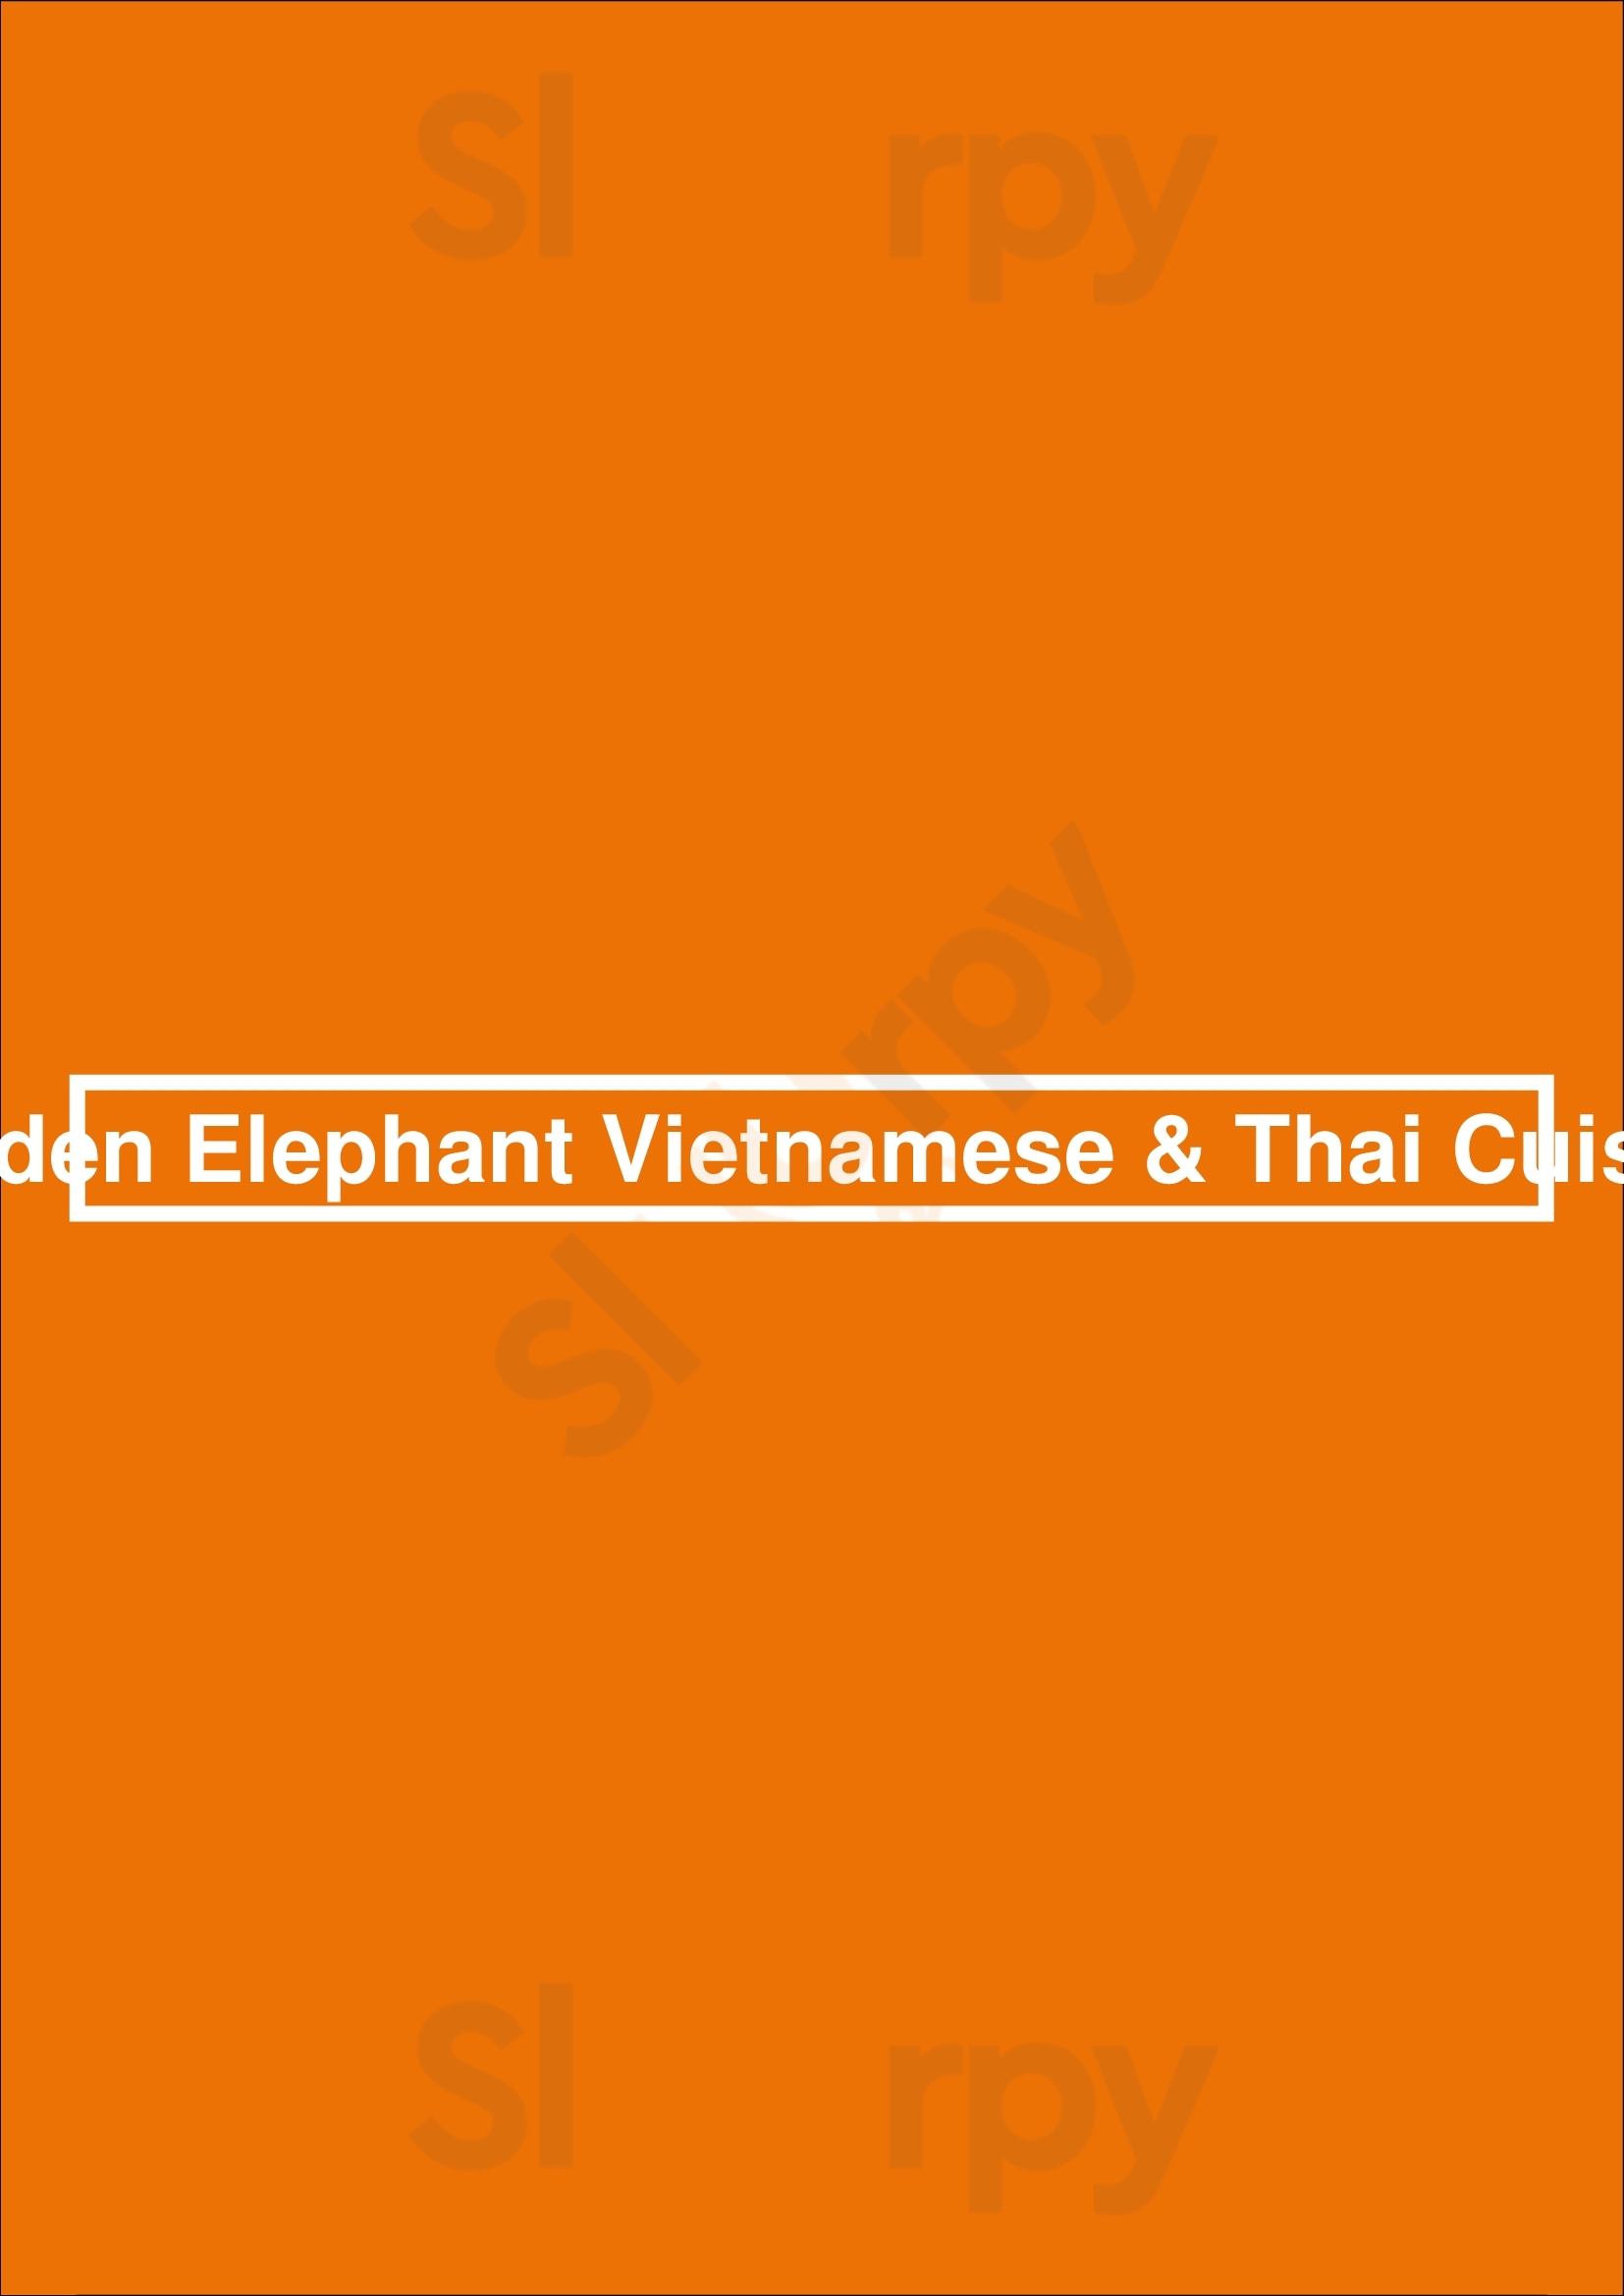 Golden Elephant Vietnamese & Thai Cuisine Winnipeg Menu - 1